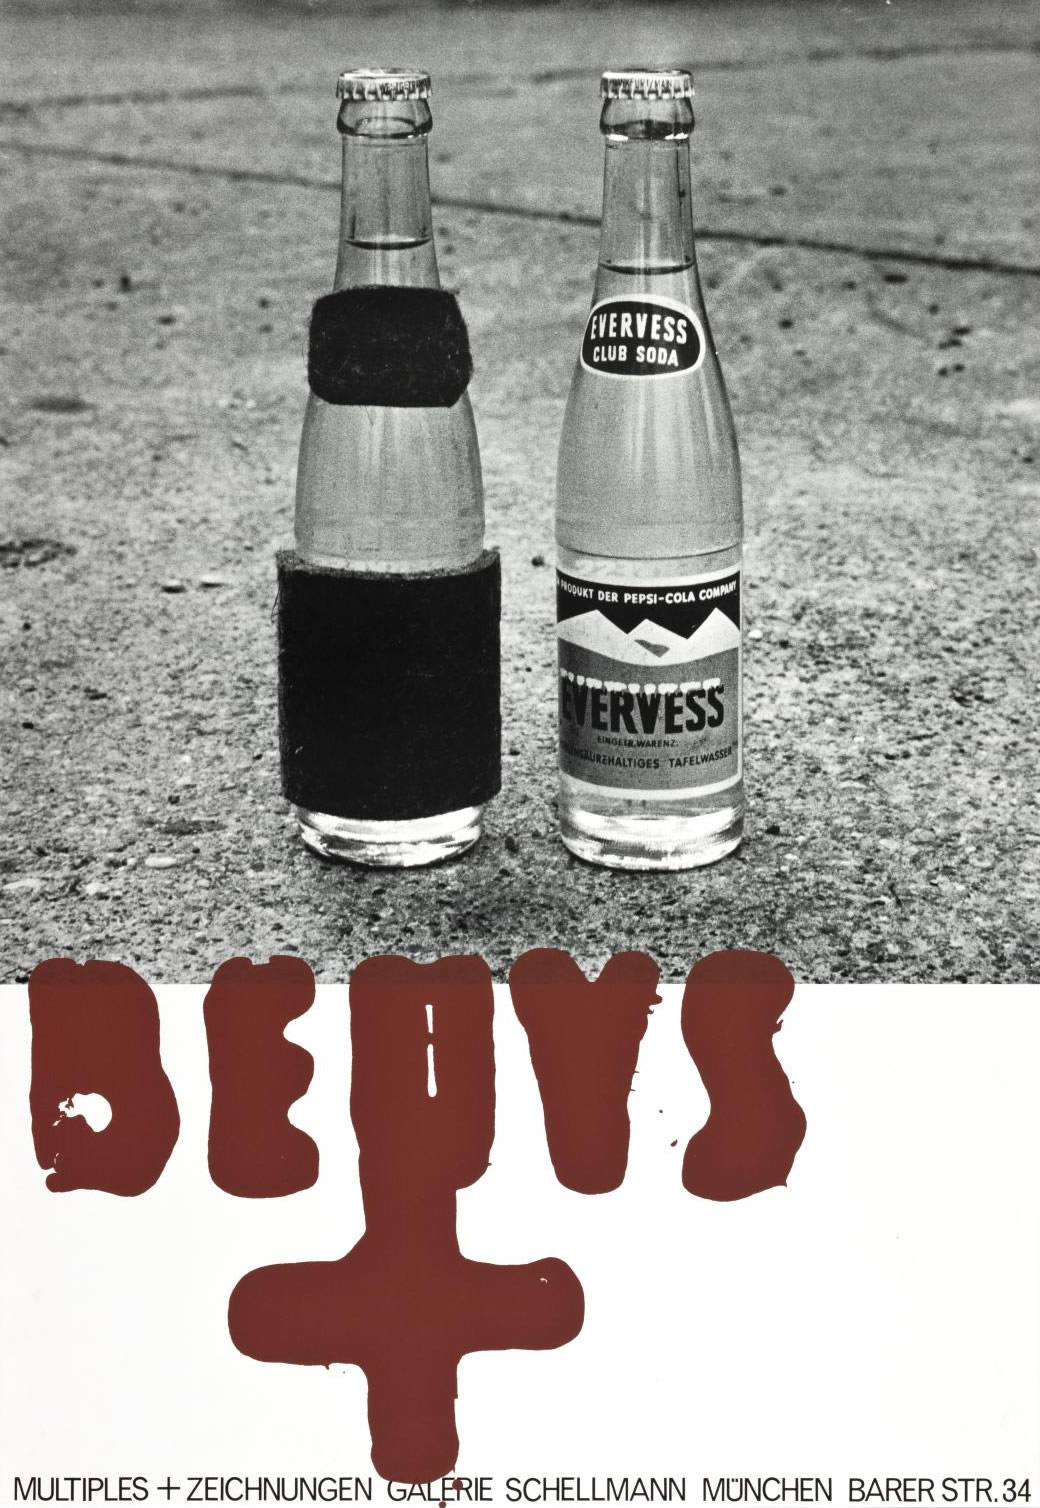 Beuys: Multiples + Drawings. 1971